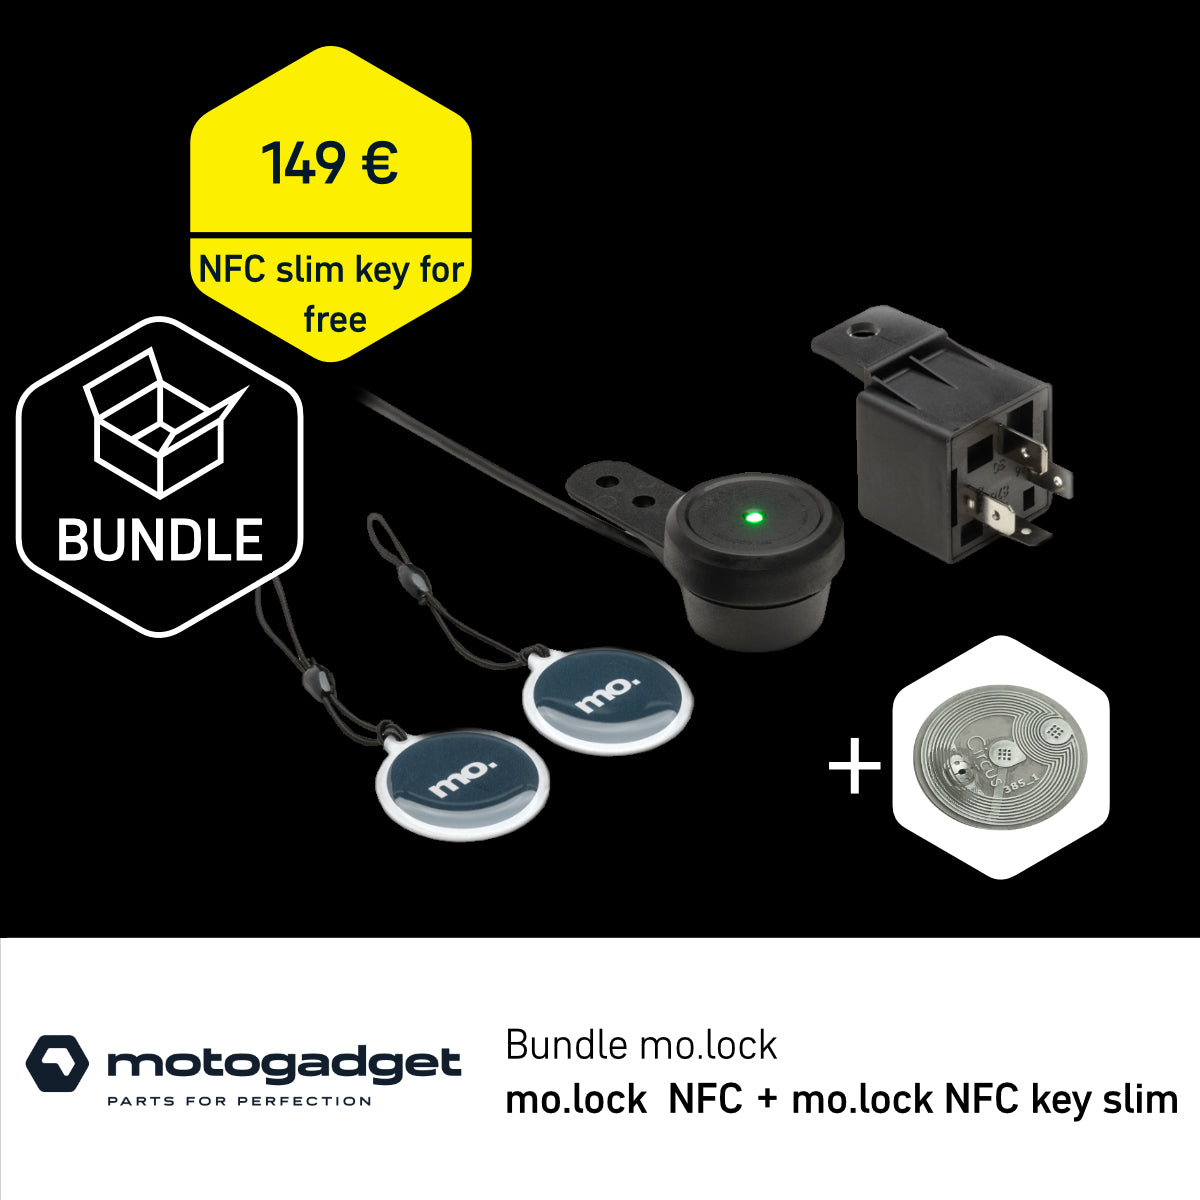 Bundle mo.lock NFC + NFC Key slim